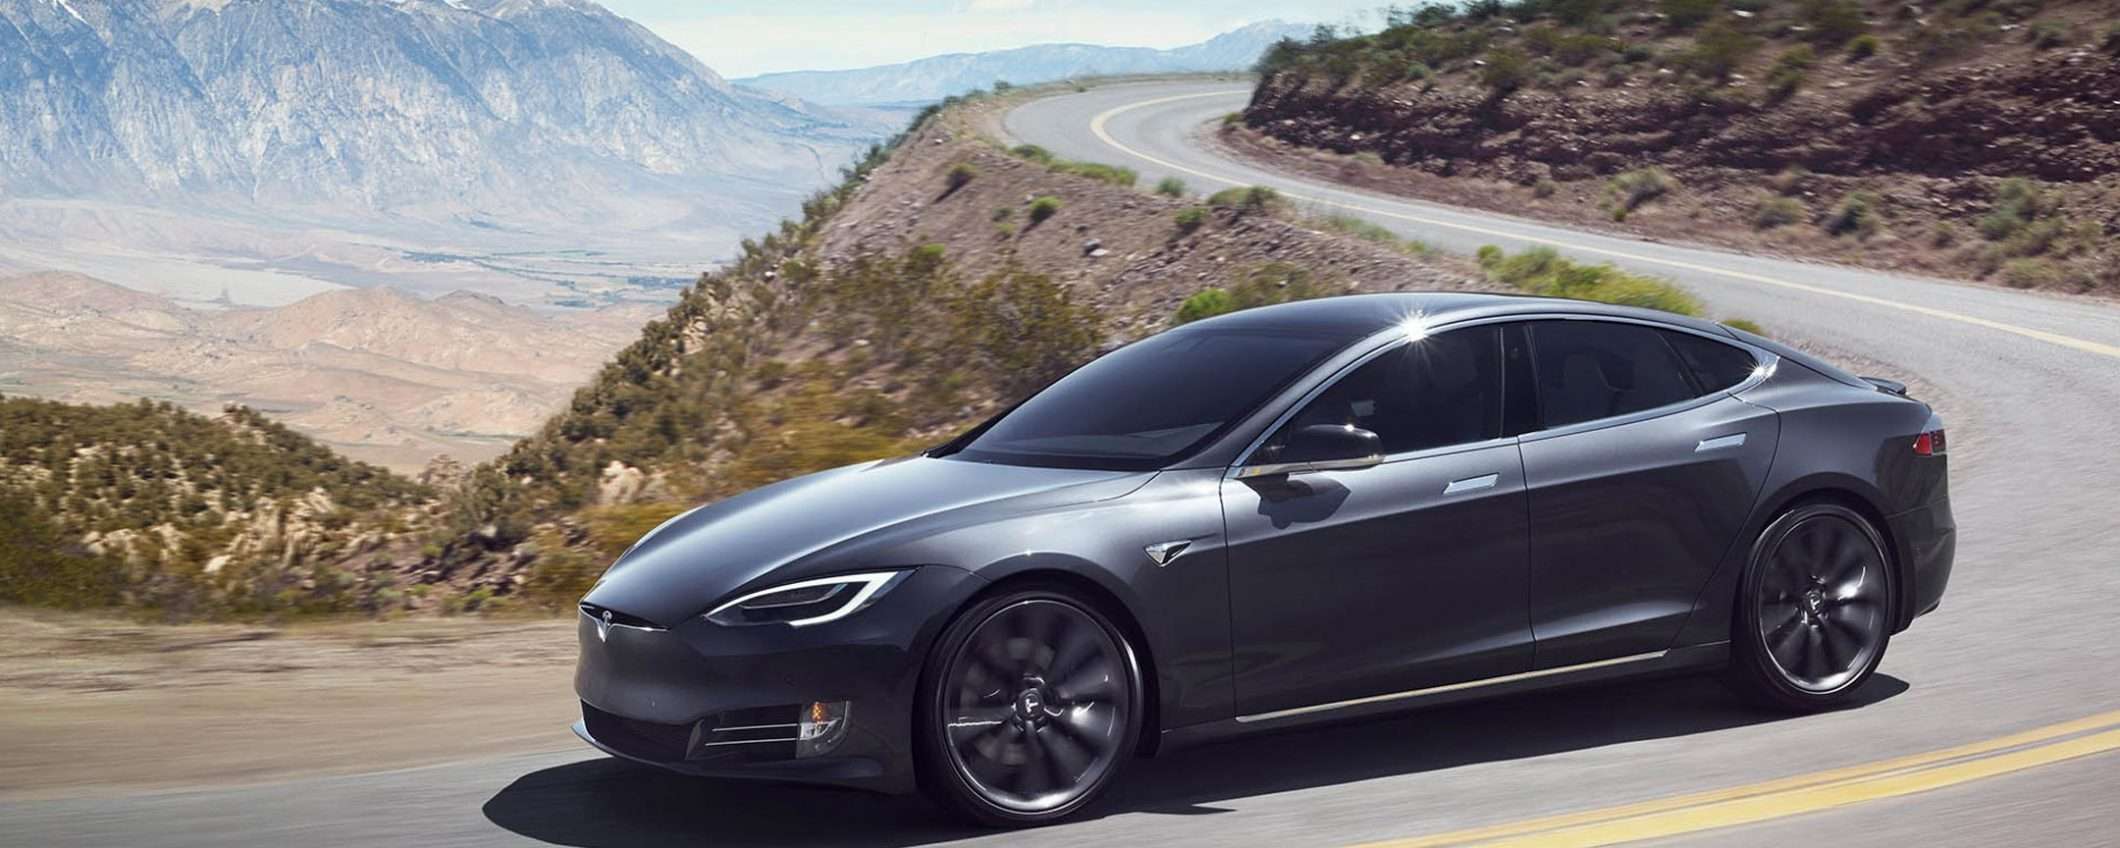 Una dashcam sulle Tesla grazie ad Autopilot